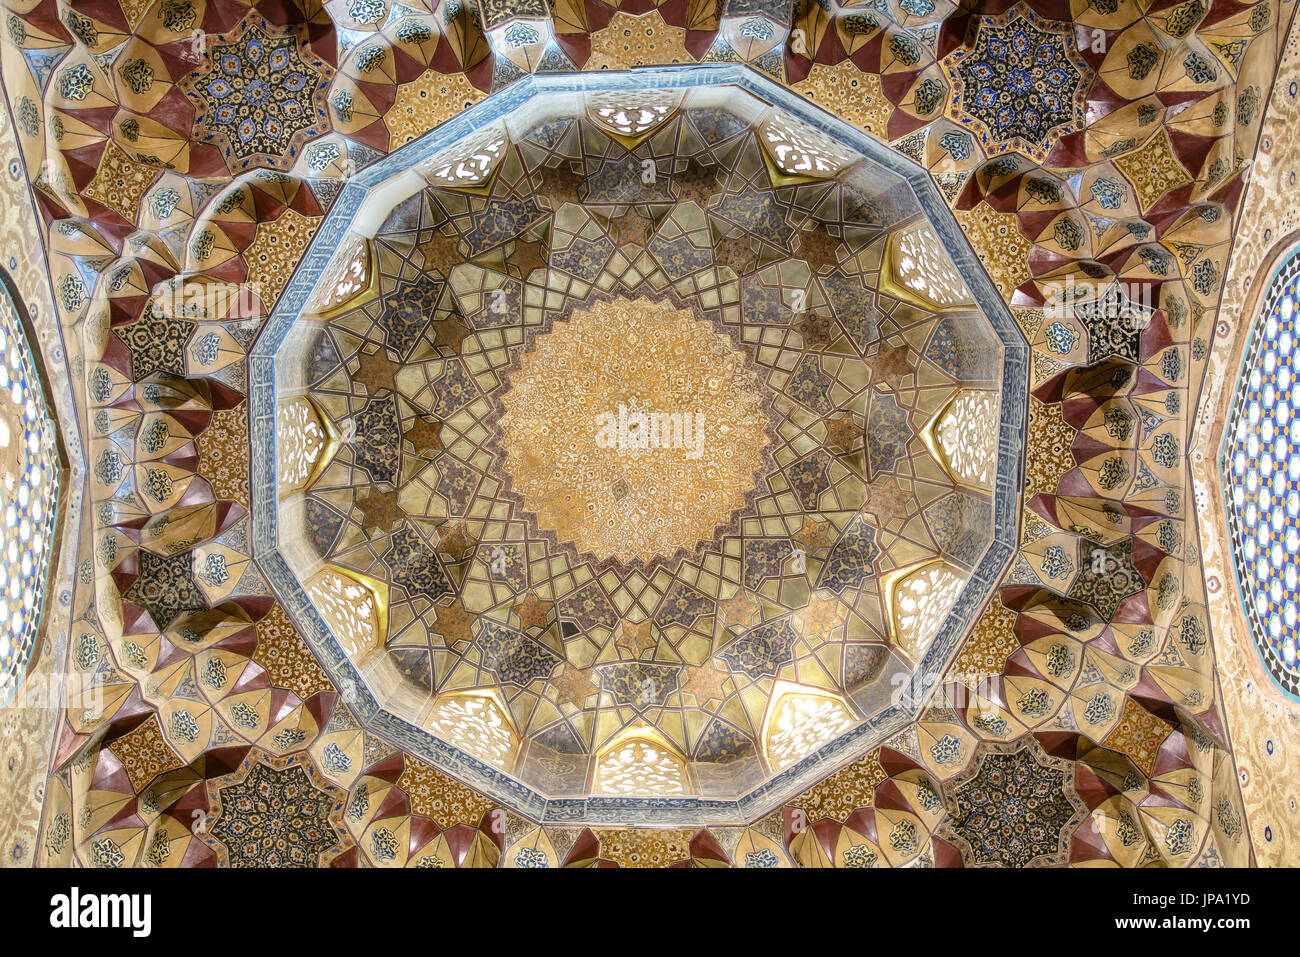 KERMAN, IRAN - APRIL 19, 2015: ceiling of Ganjali Khan Mosque, Kerman, Iran Stock Photo